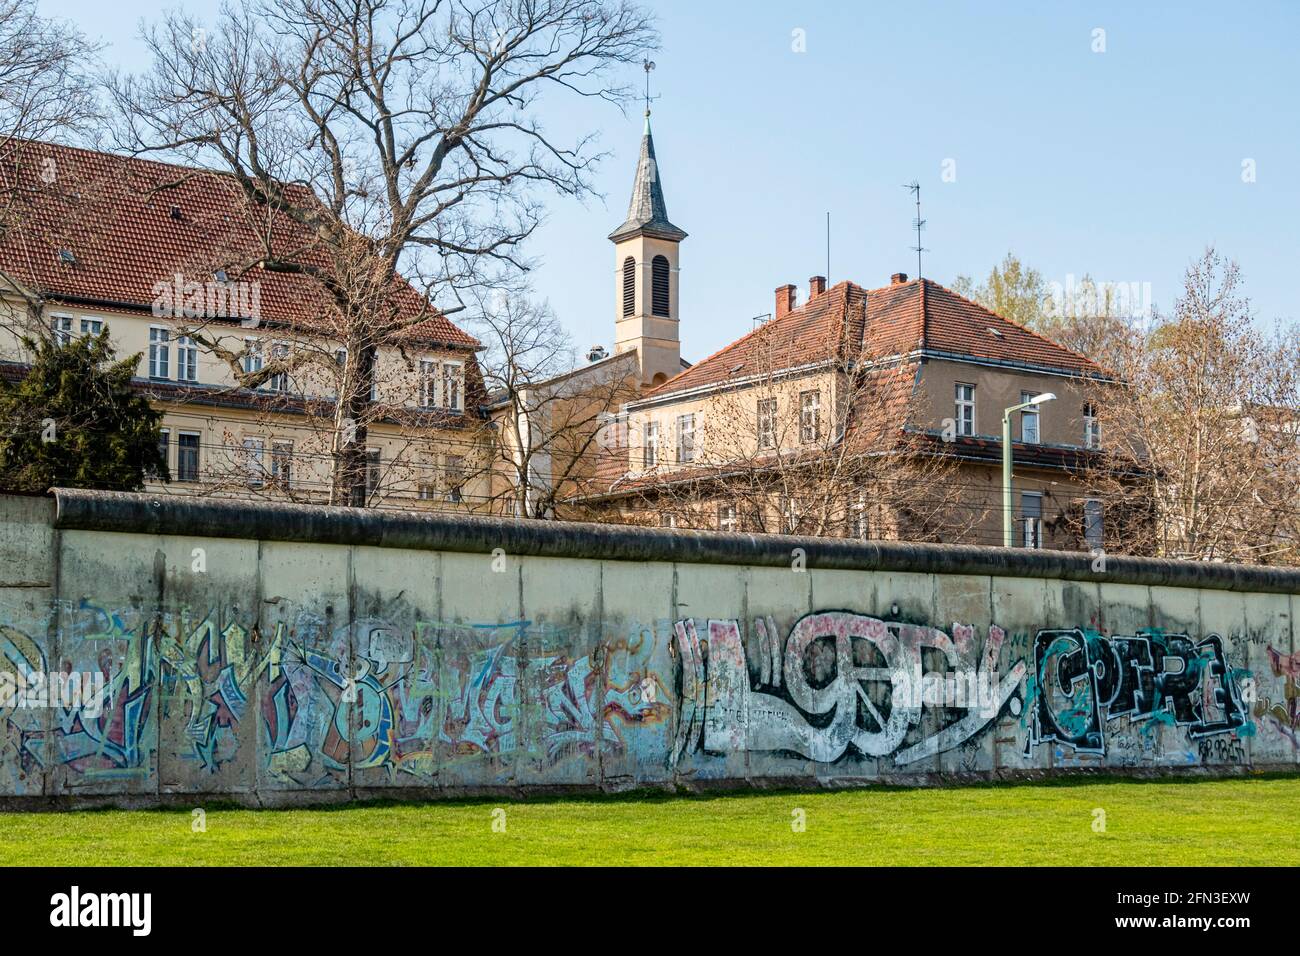 Gedenkstätte Berliner Mauer, Berlin Wall Memorial, Germany Stock Photo